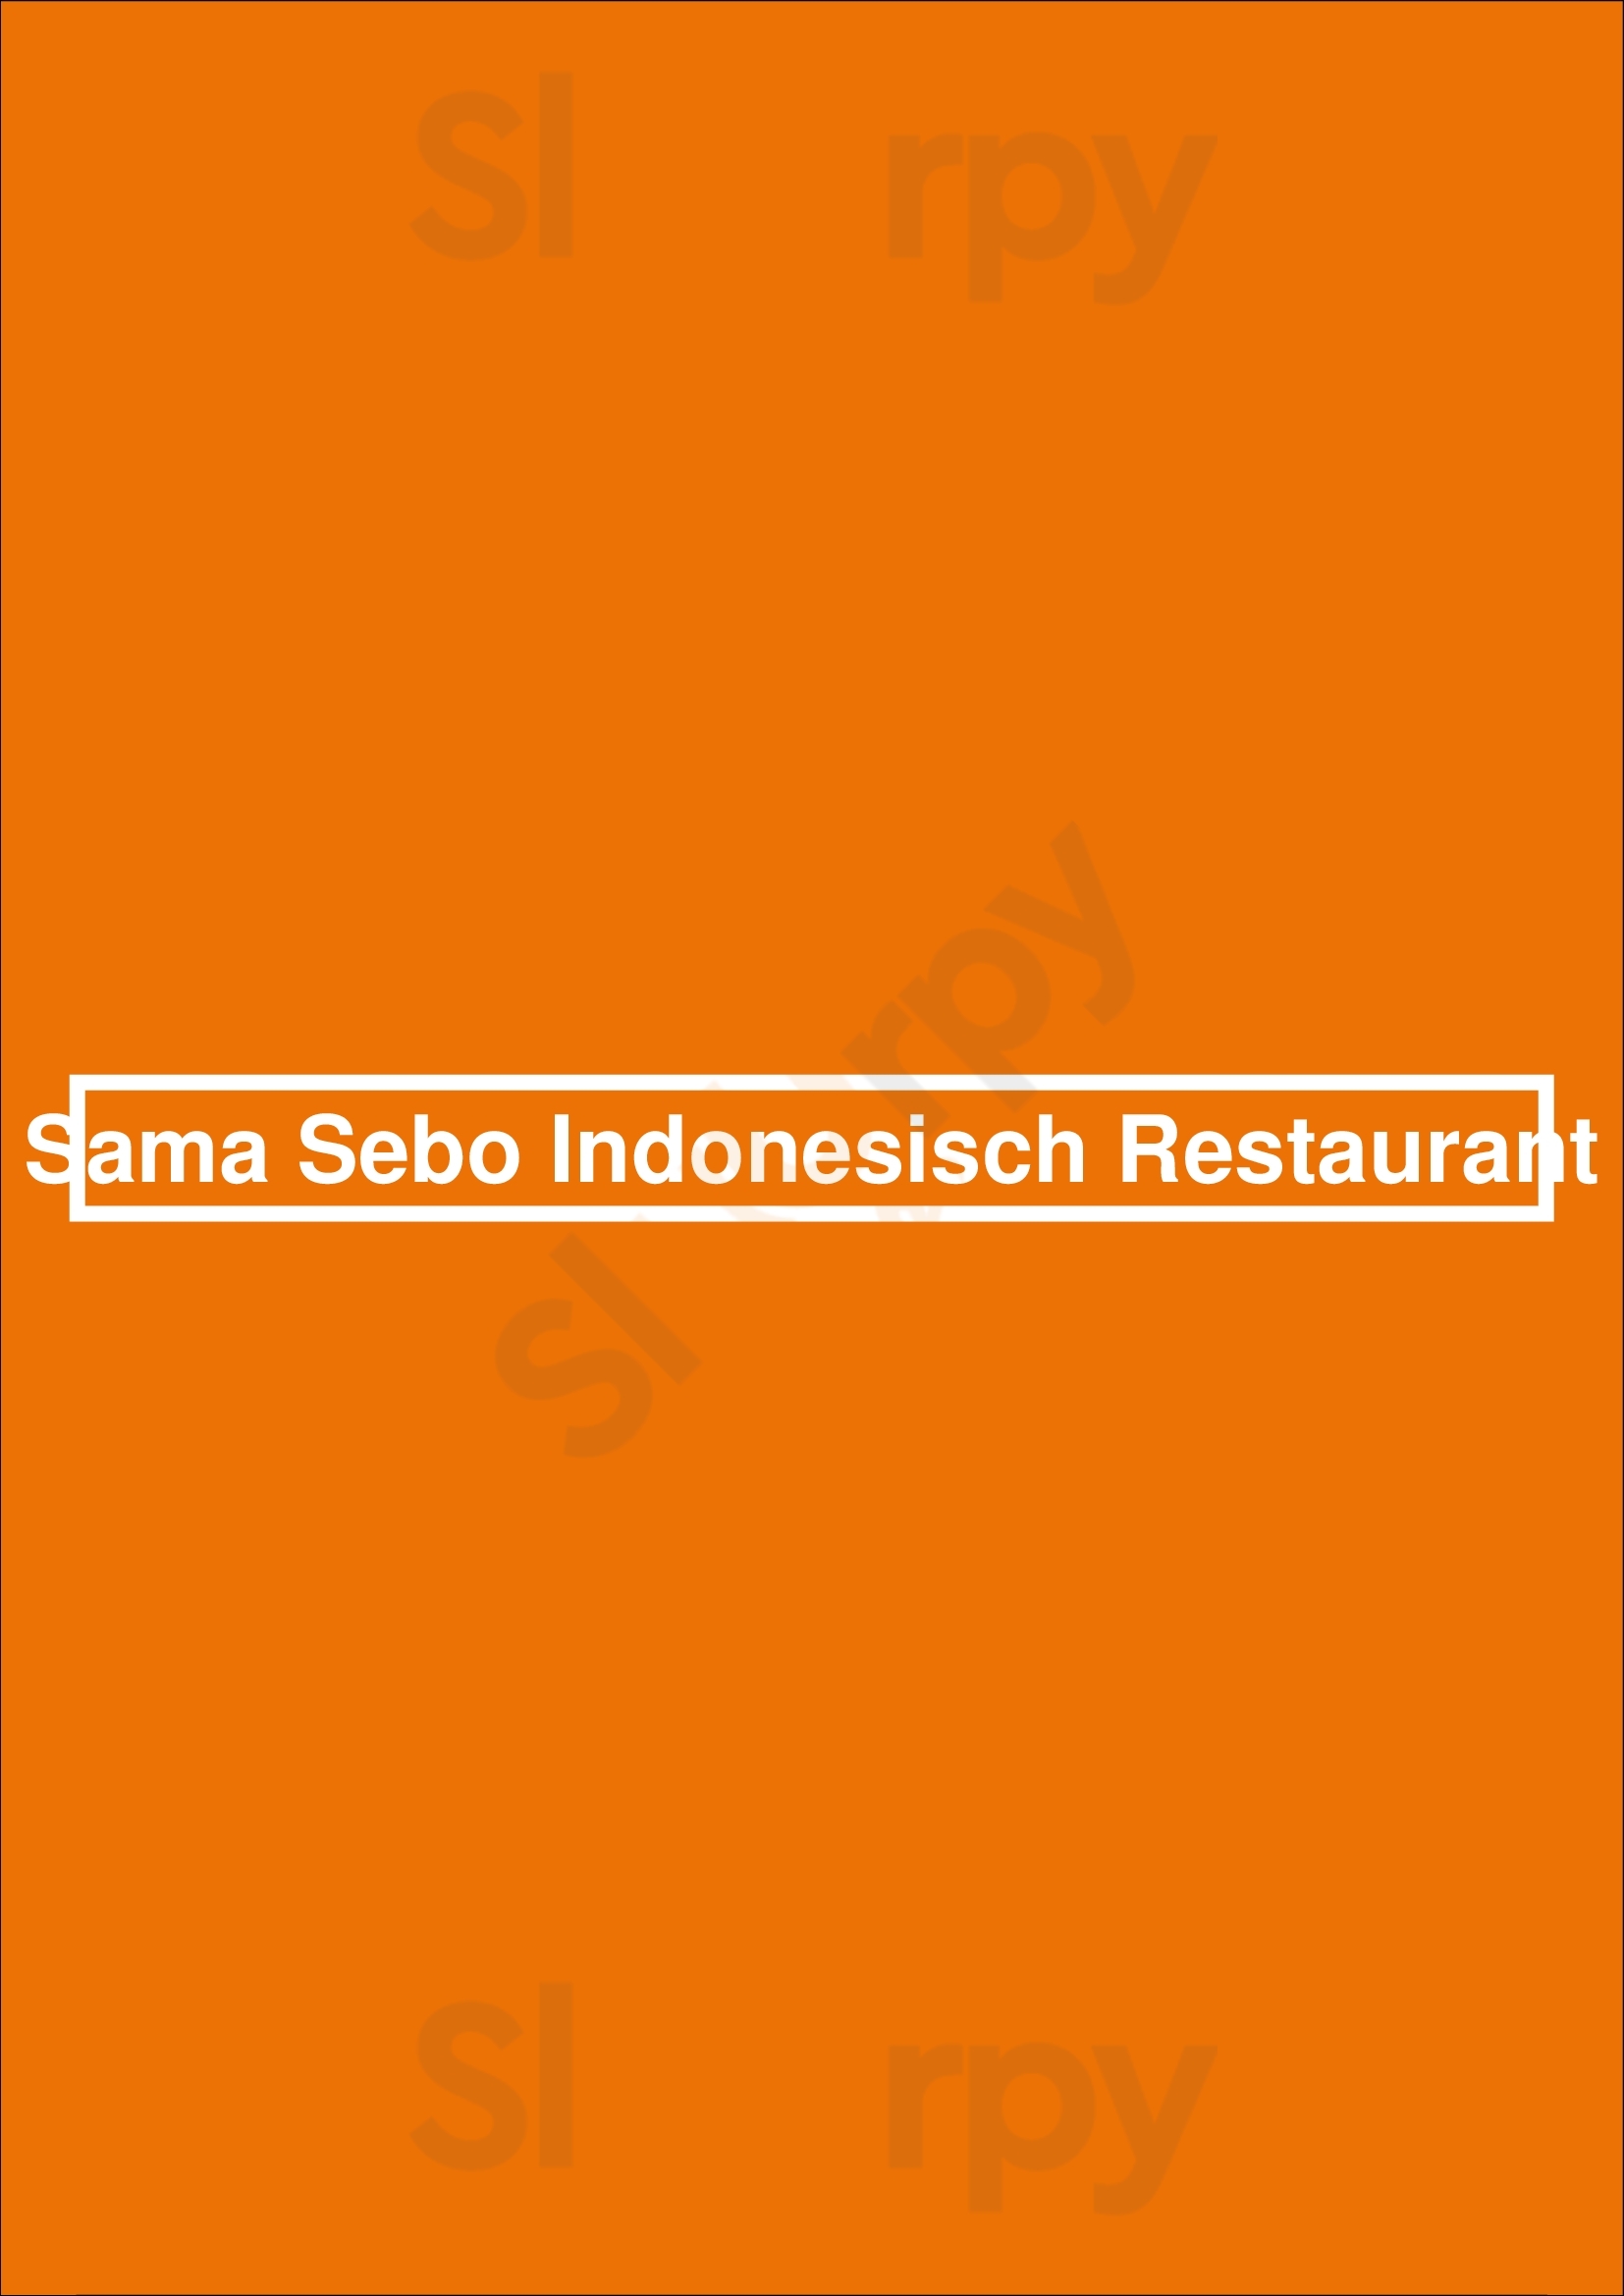 Sama Sebo Indonesisch Restaurant Amsterdam Menu - 1